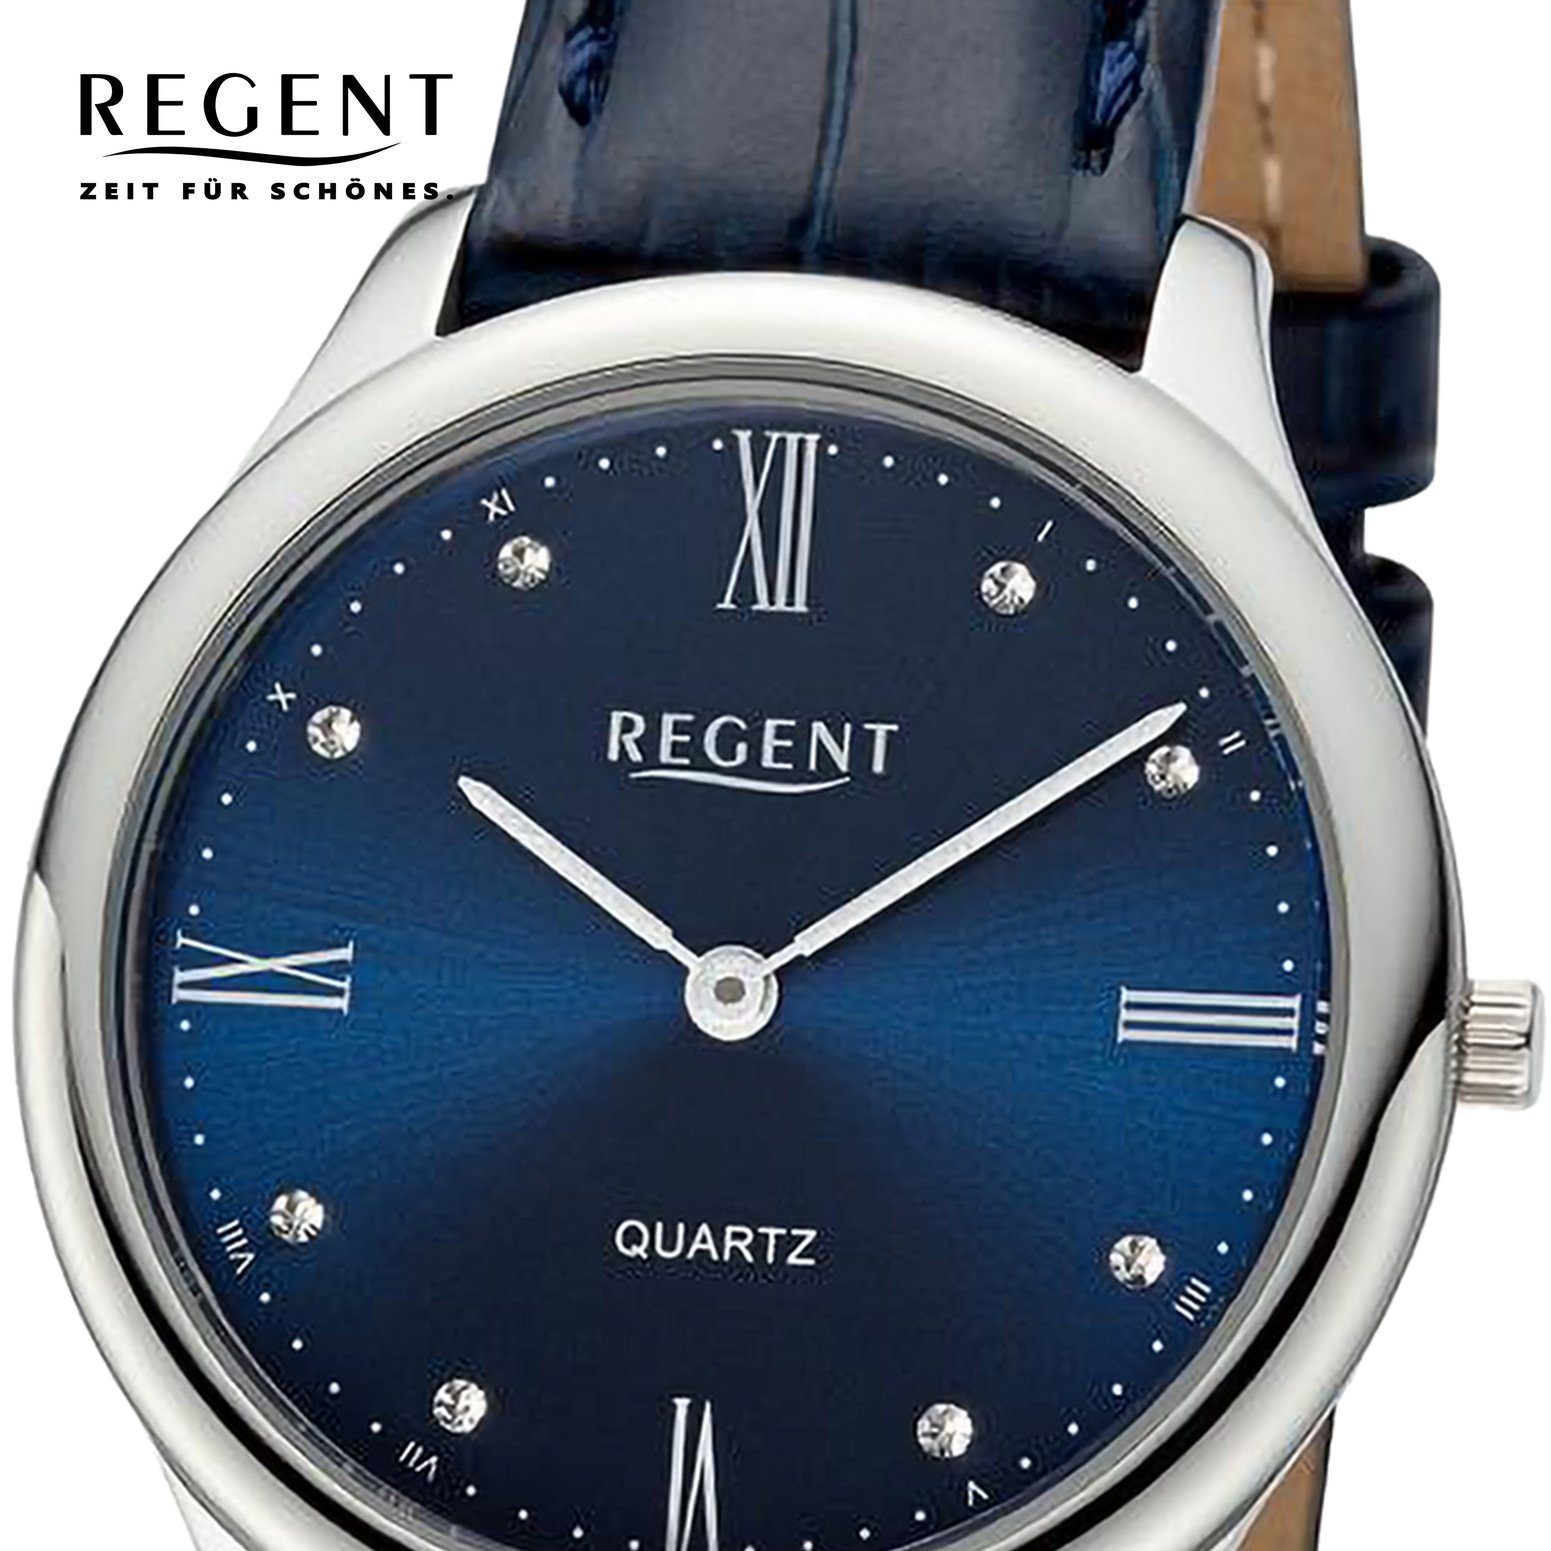 33mm), Analog, rund, Armbanduhr Lederarmband Damen groß extra Damen Armbanduhr Quarzuhr Regent Regent (ca.